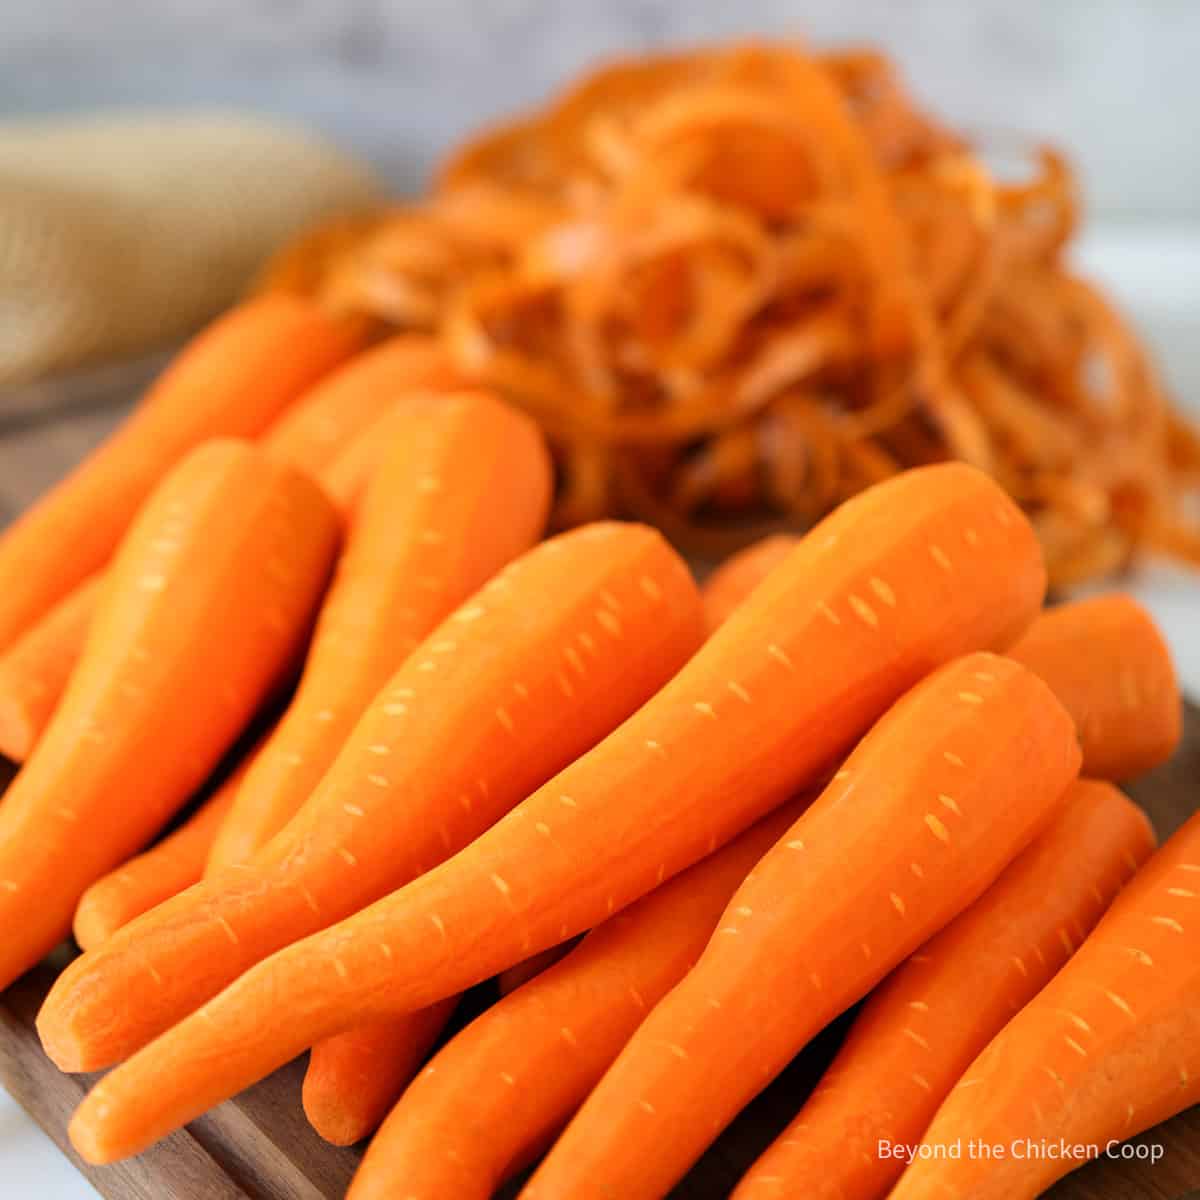 Peeled carrots on a board.